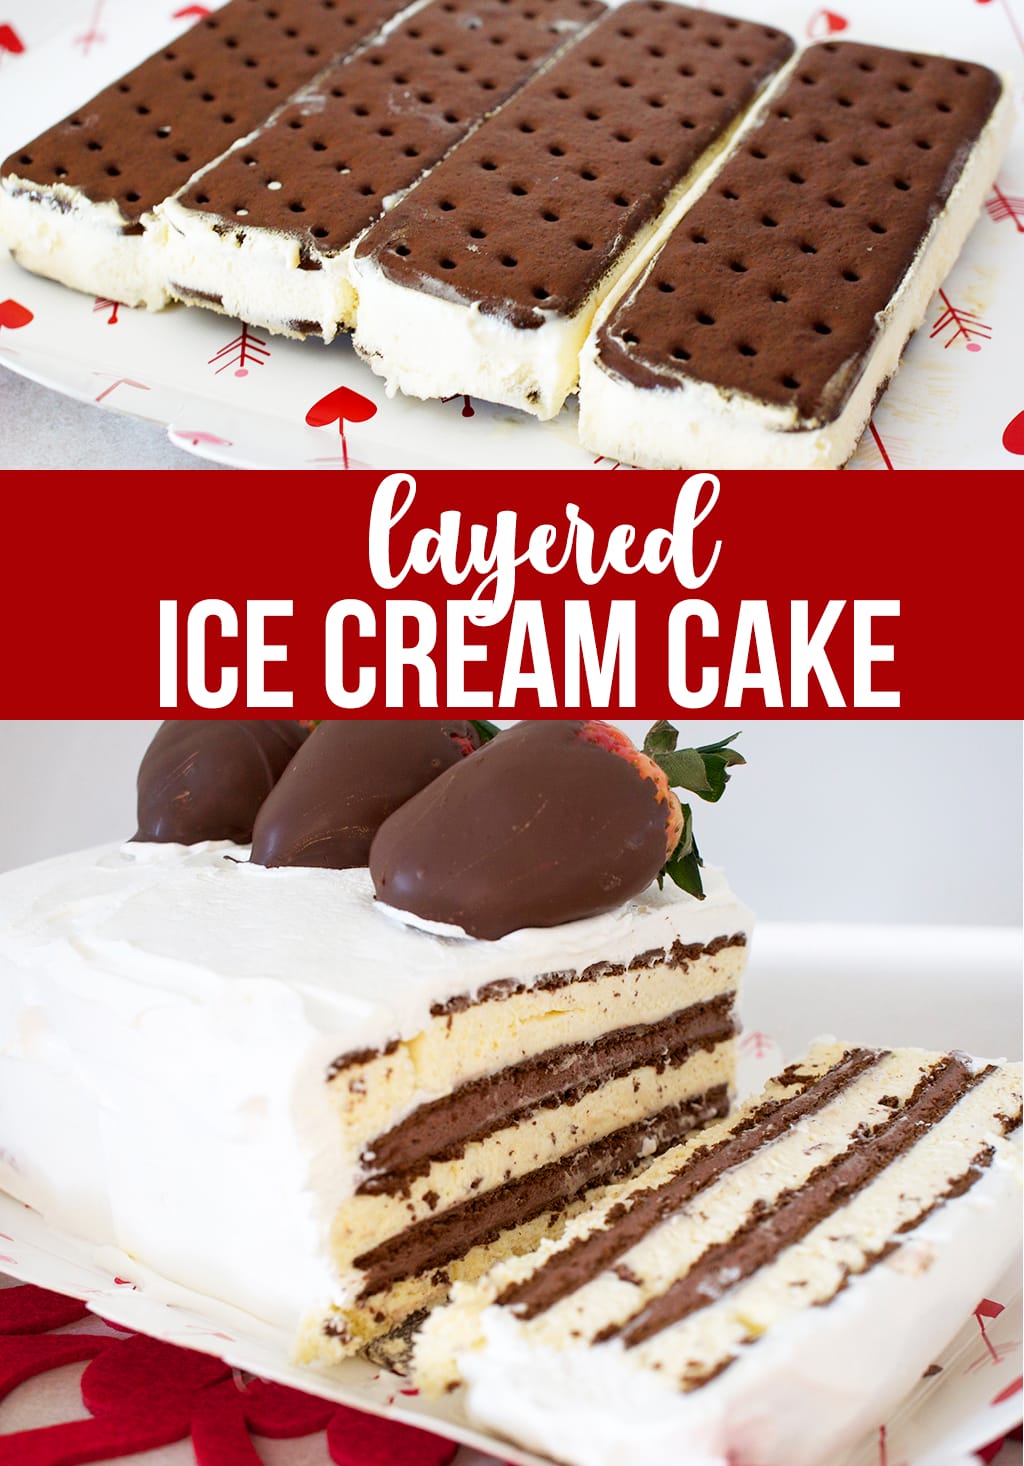 Layered Ice Cream Cake with Ice Cream Sandwiches